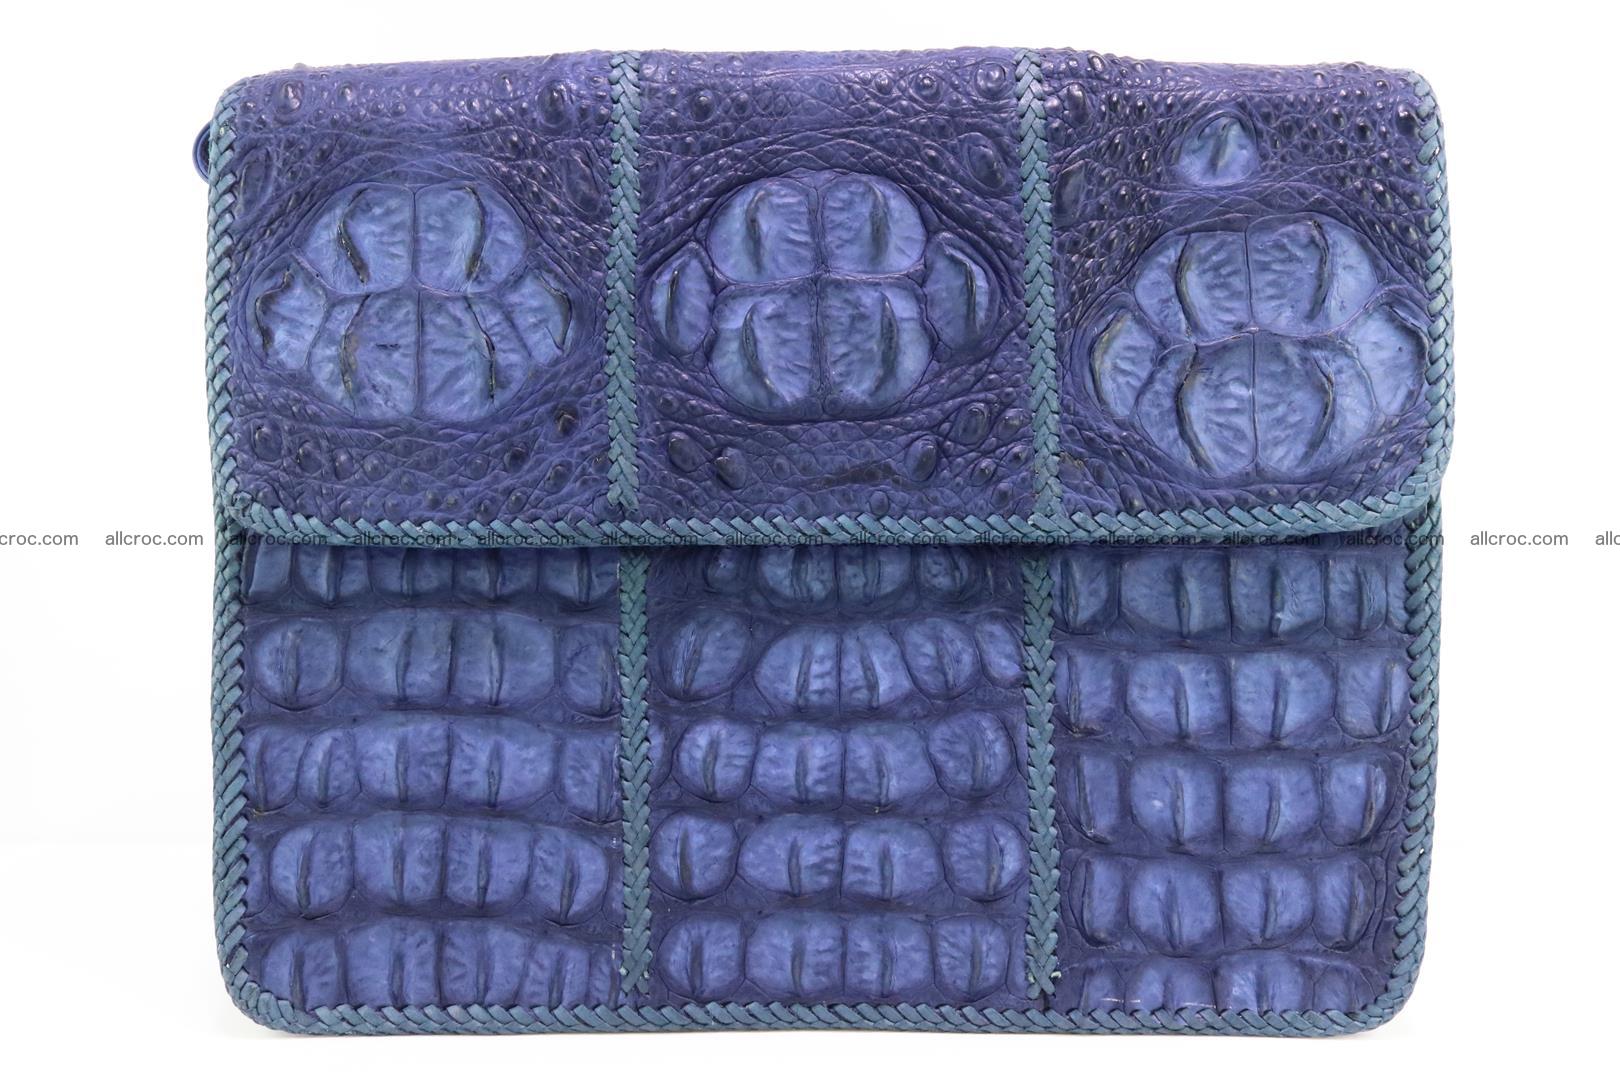 Crocodile skin shoulder bag with braided edges 144 Foto 0